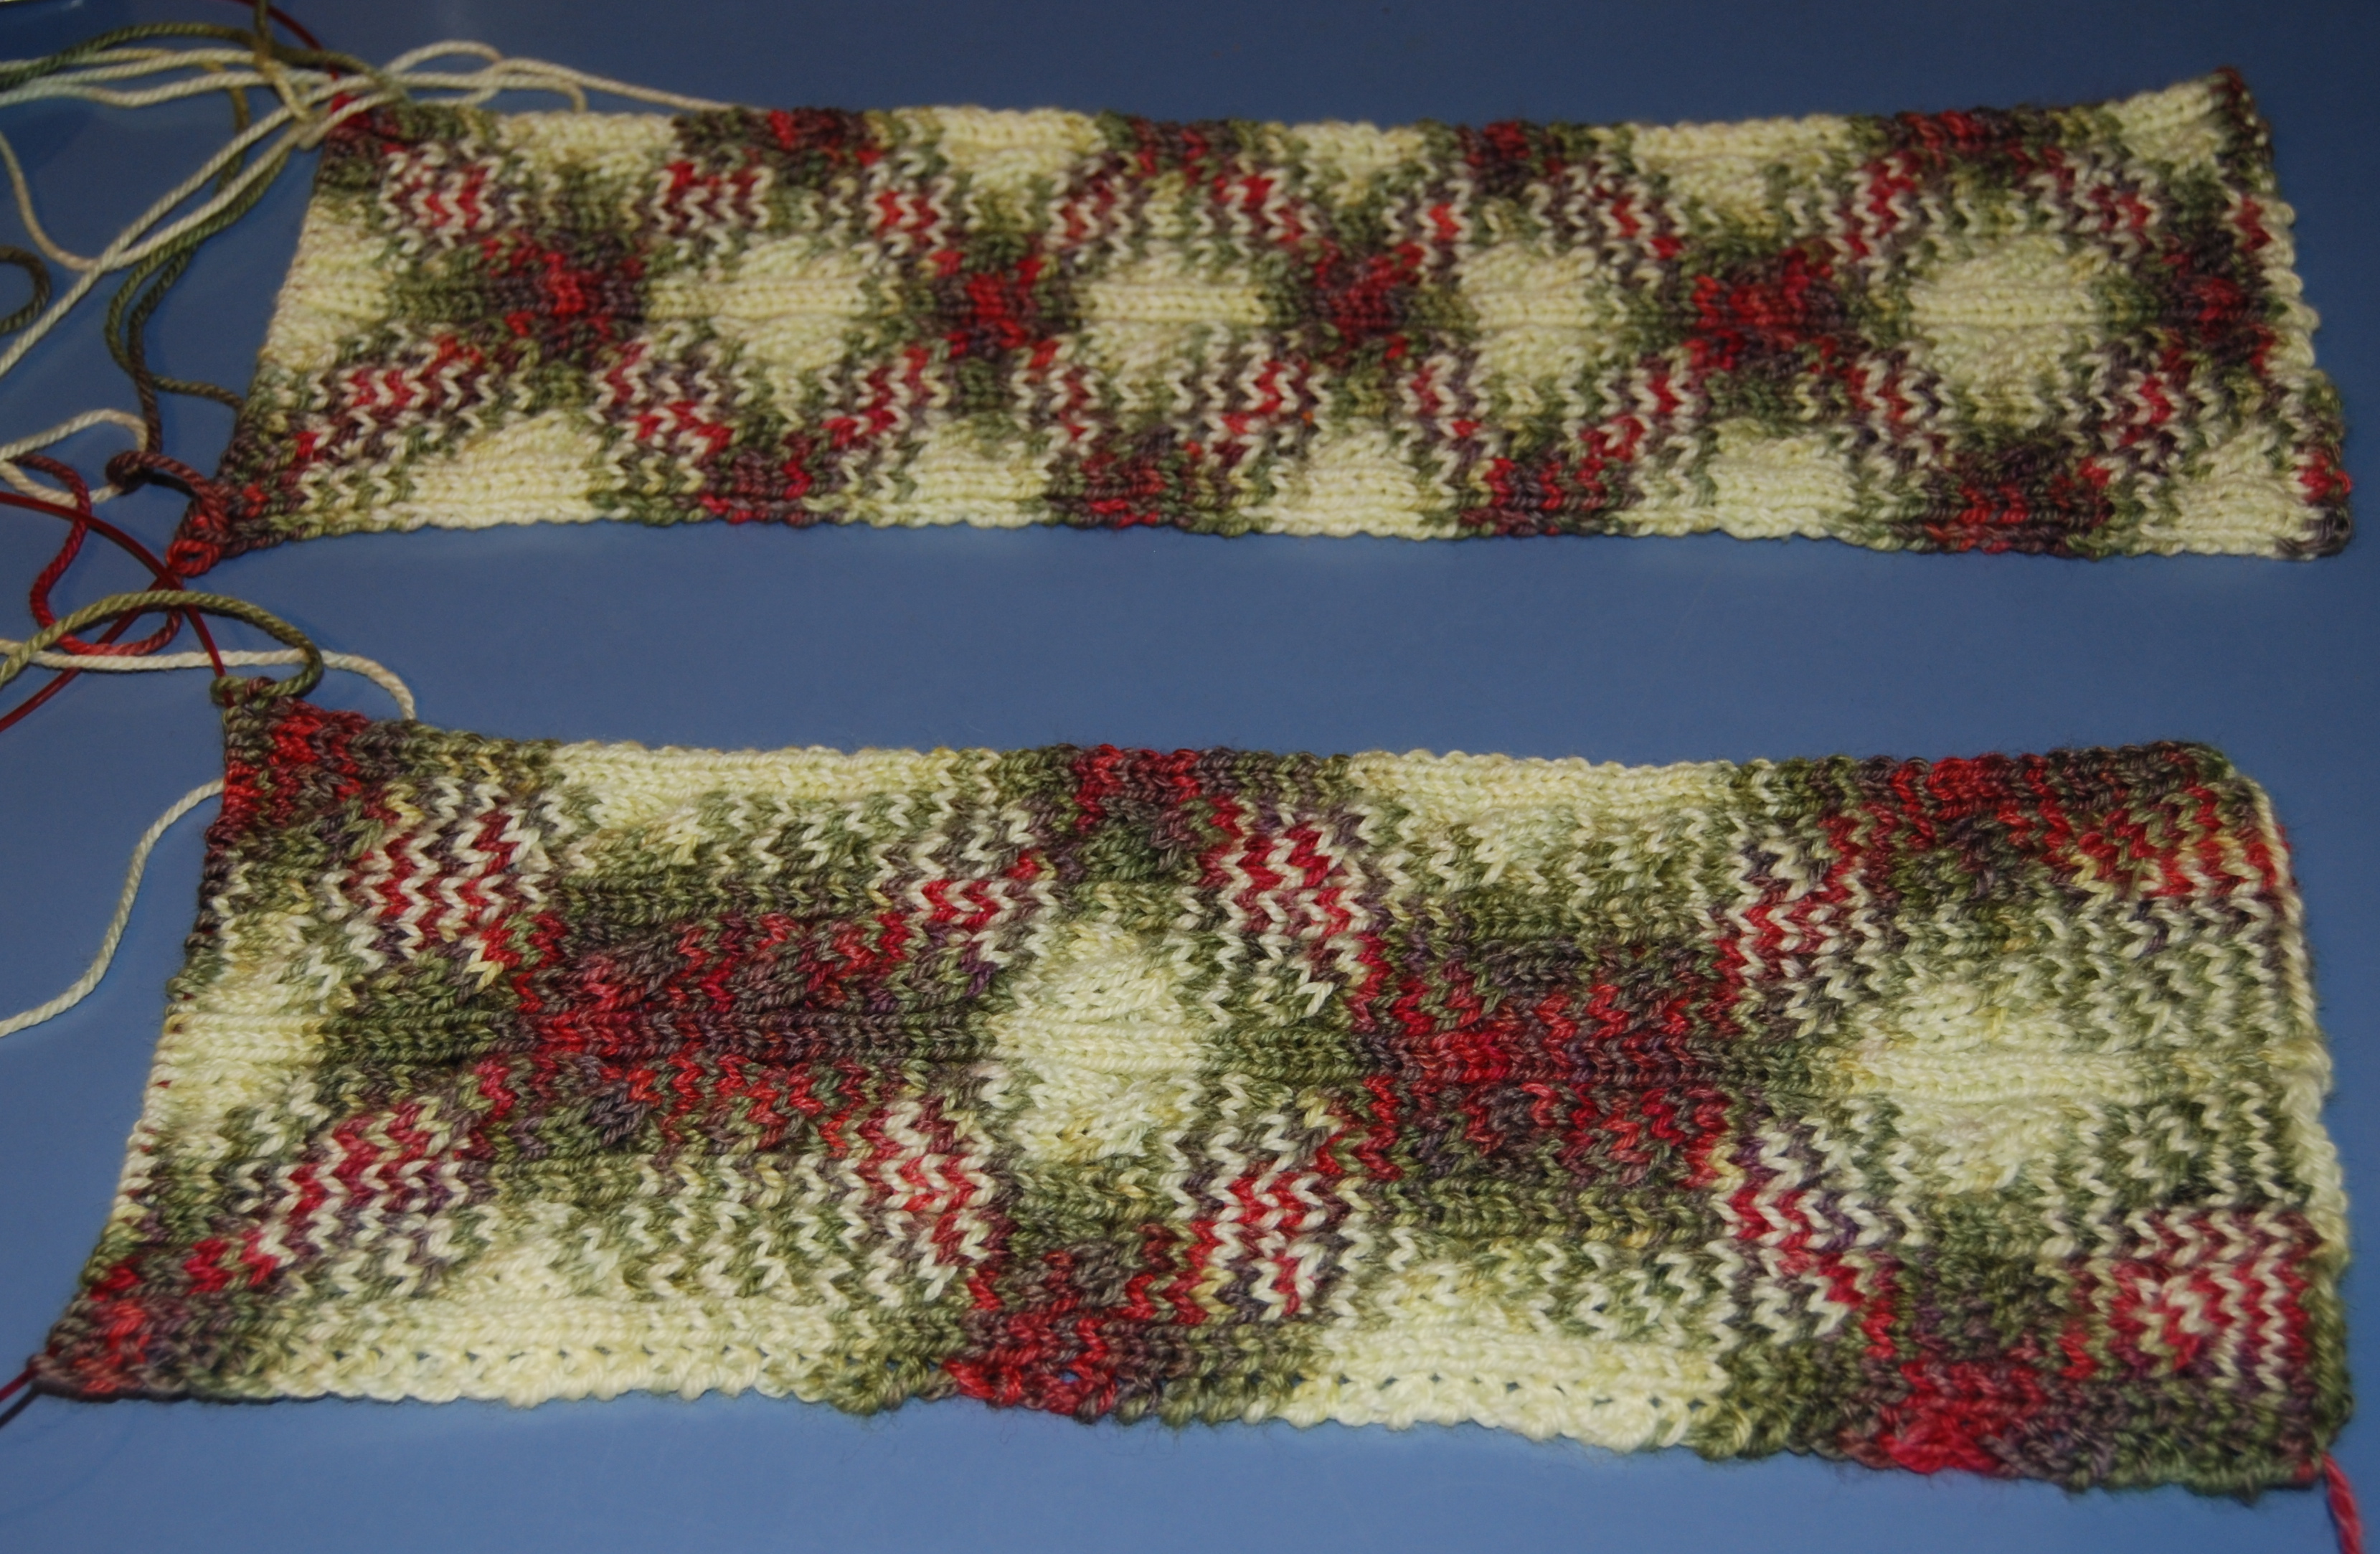 top: palindrome, US4, 52 stitches bottom: irish hiking scarf, US4, 54 stitches